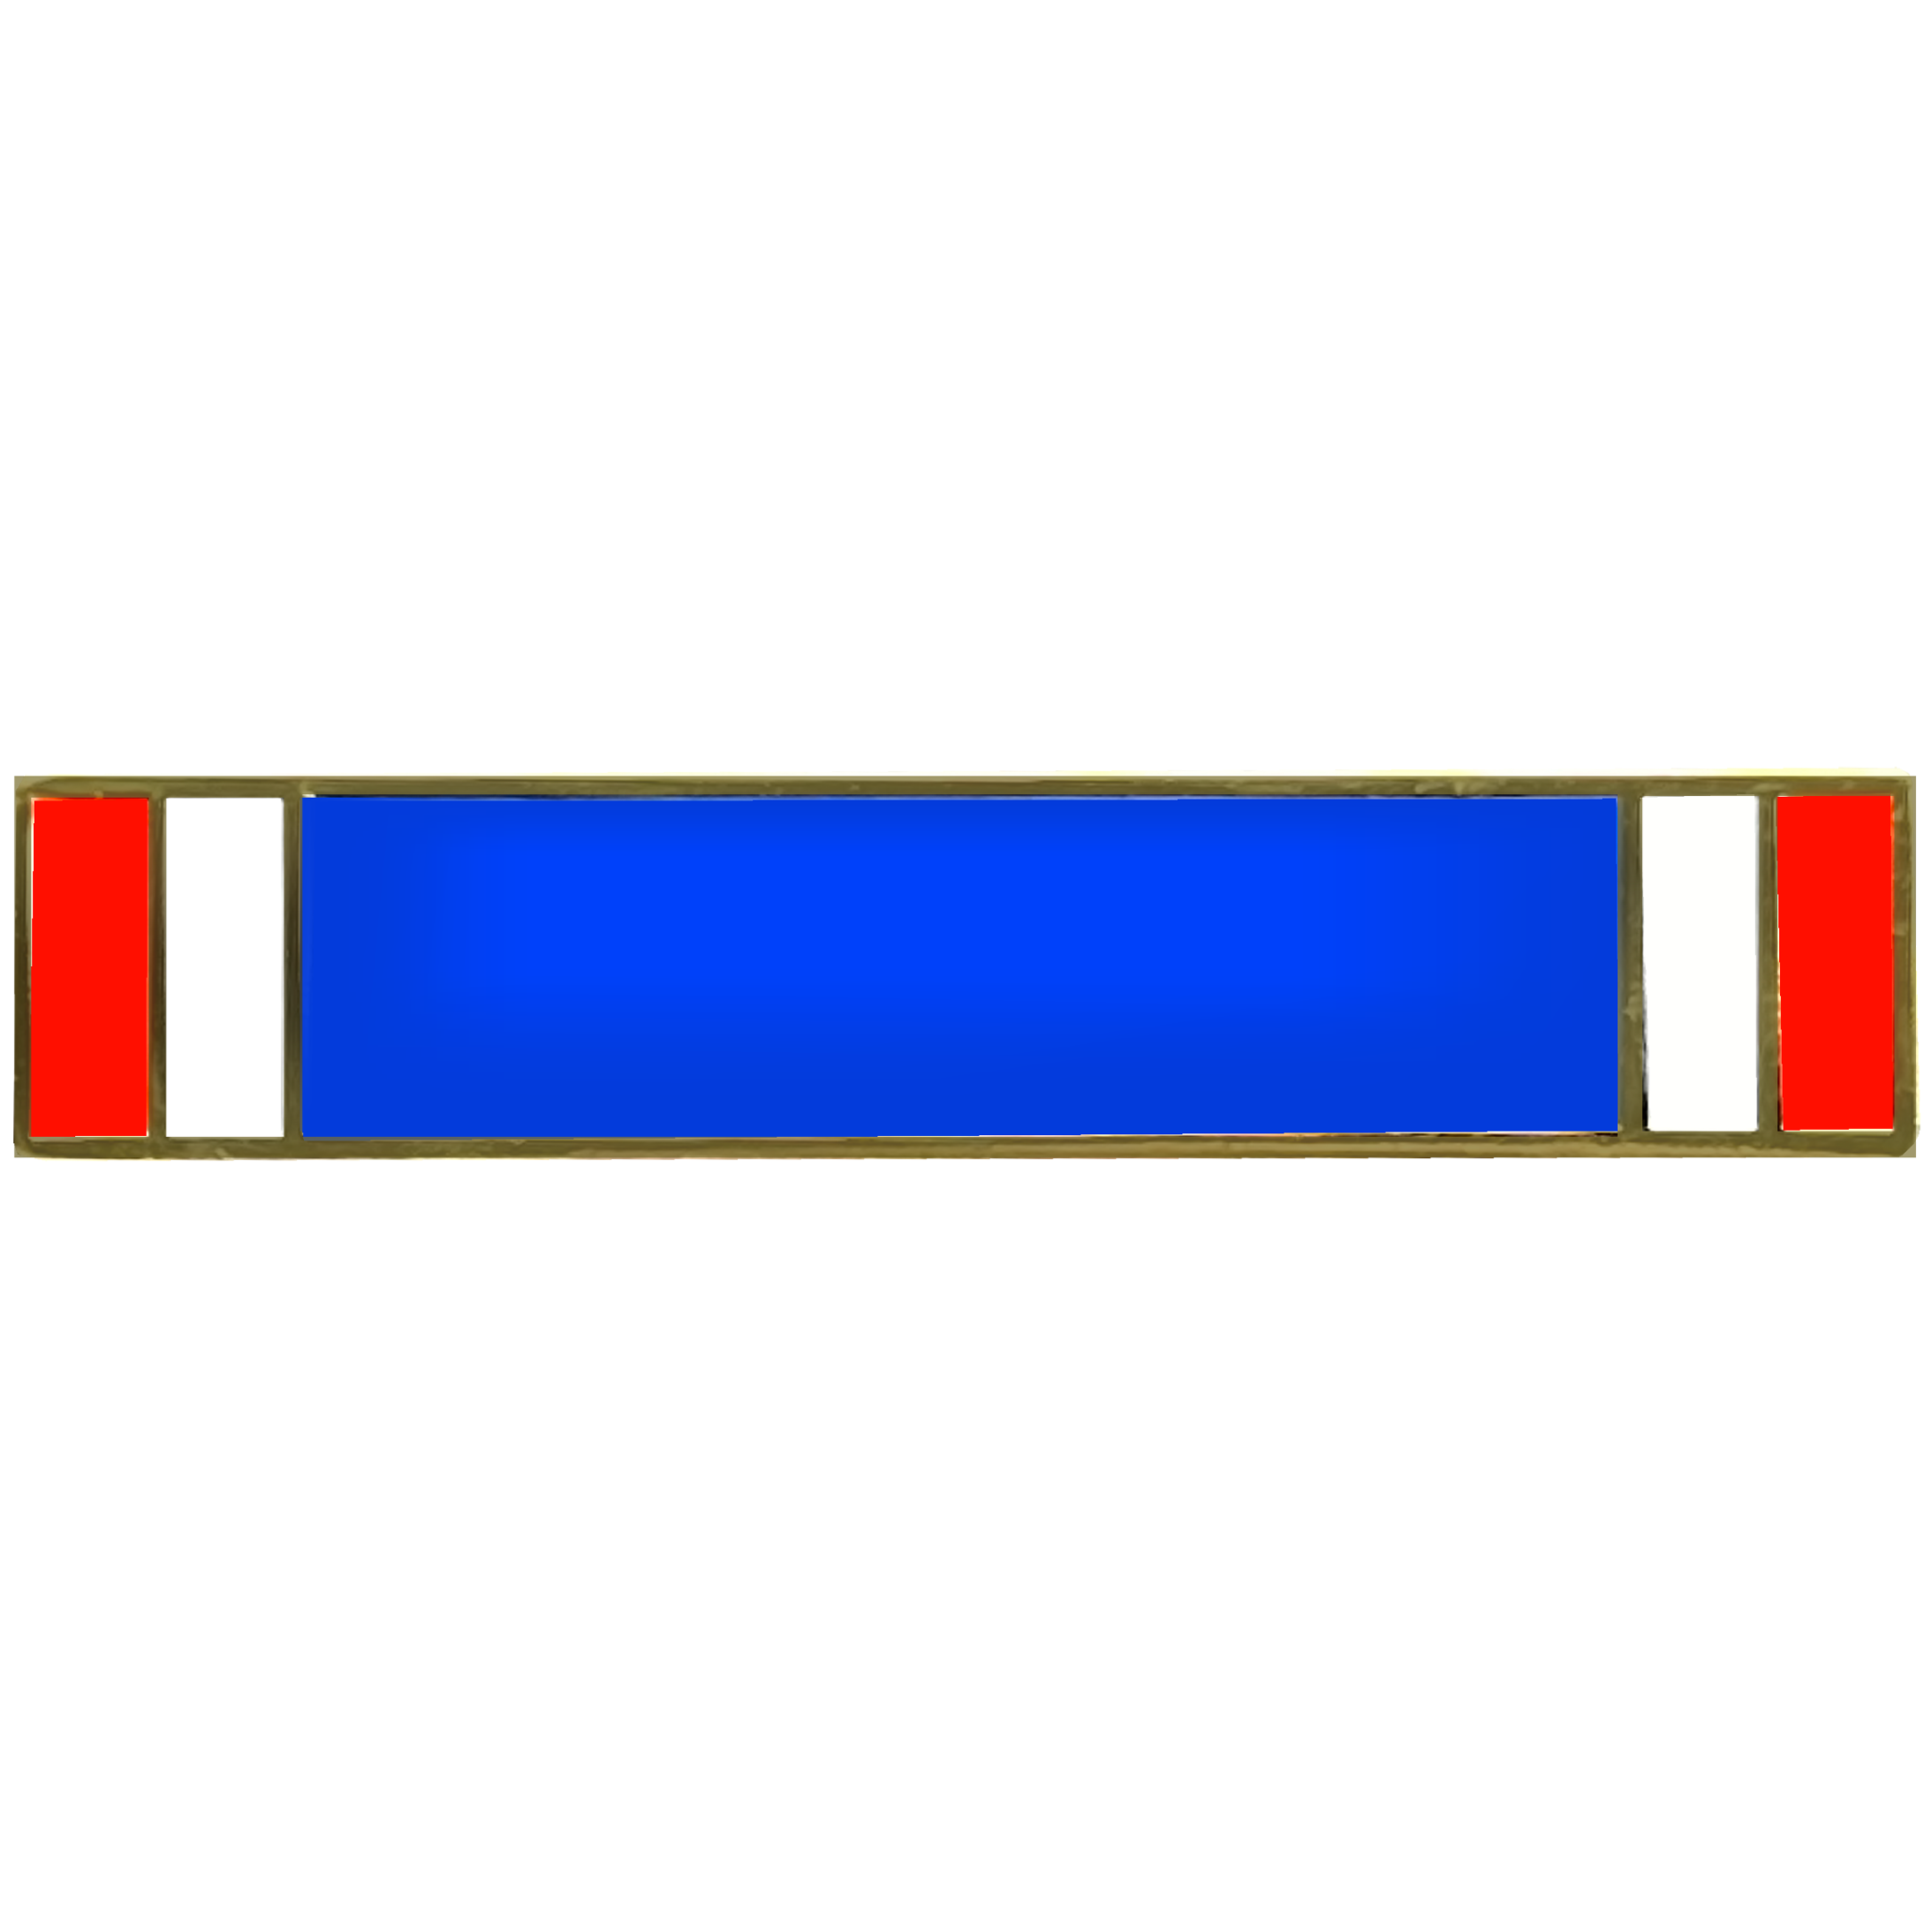 BL16-022 Exceptional Service Unit Citation Commendation Bar Pin Police CBP Officer